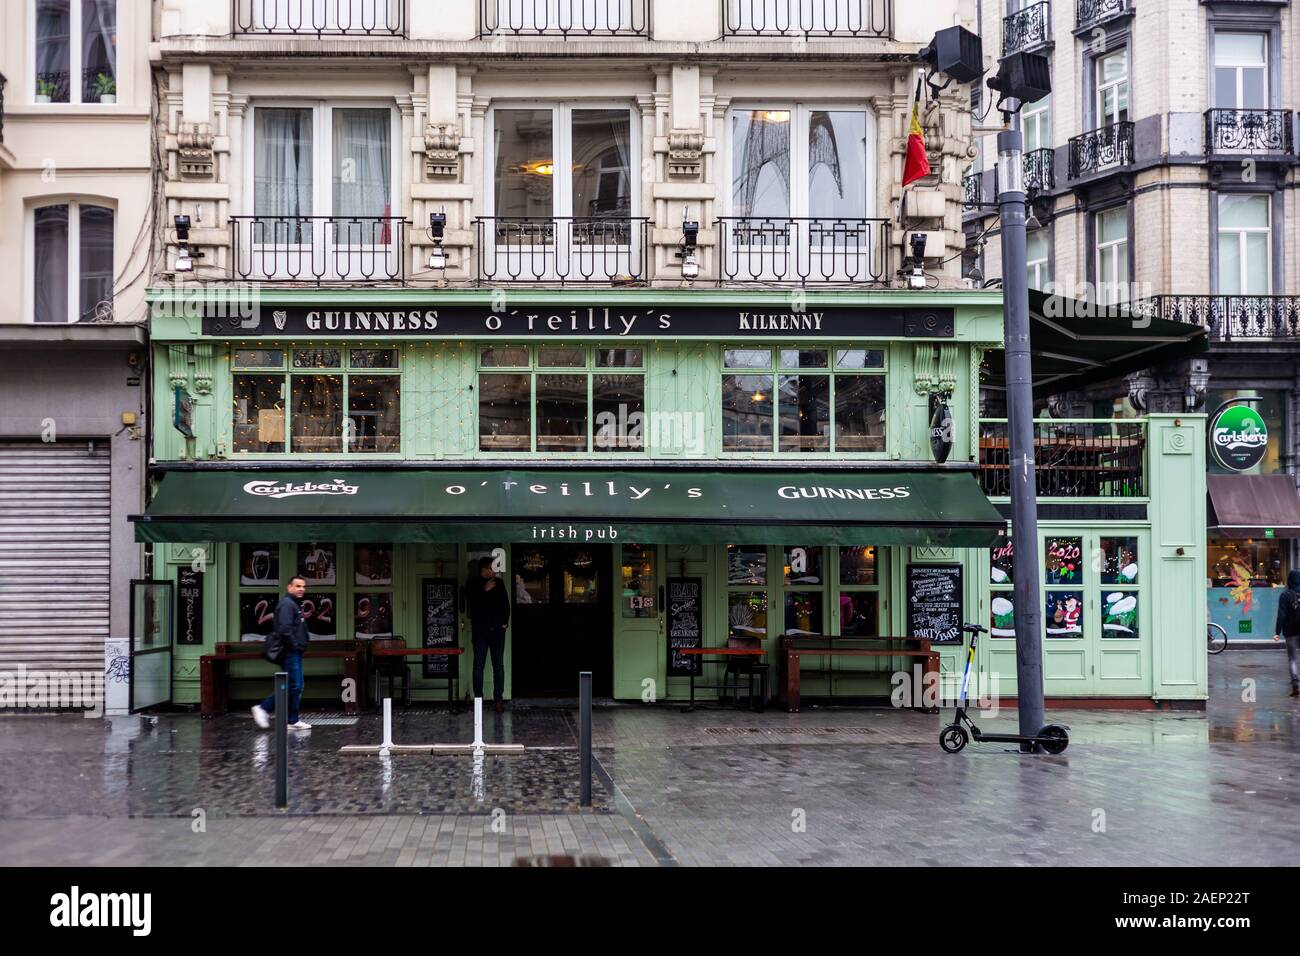 O’reilly’s Brussels irish pub, Brussels, Belgium Stock Photo